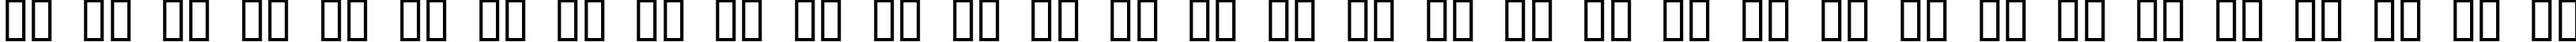 Пример написания русского алфавита шрифтом Fred